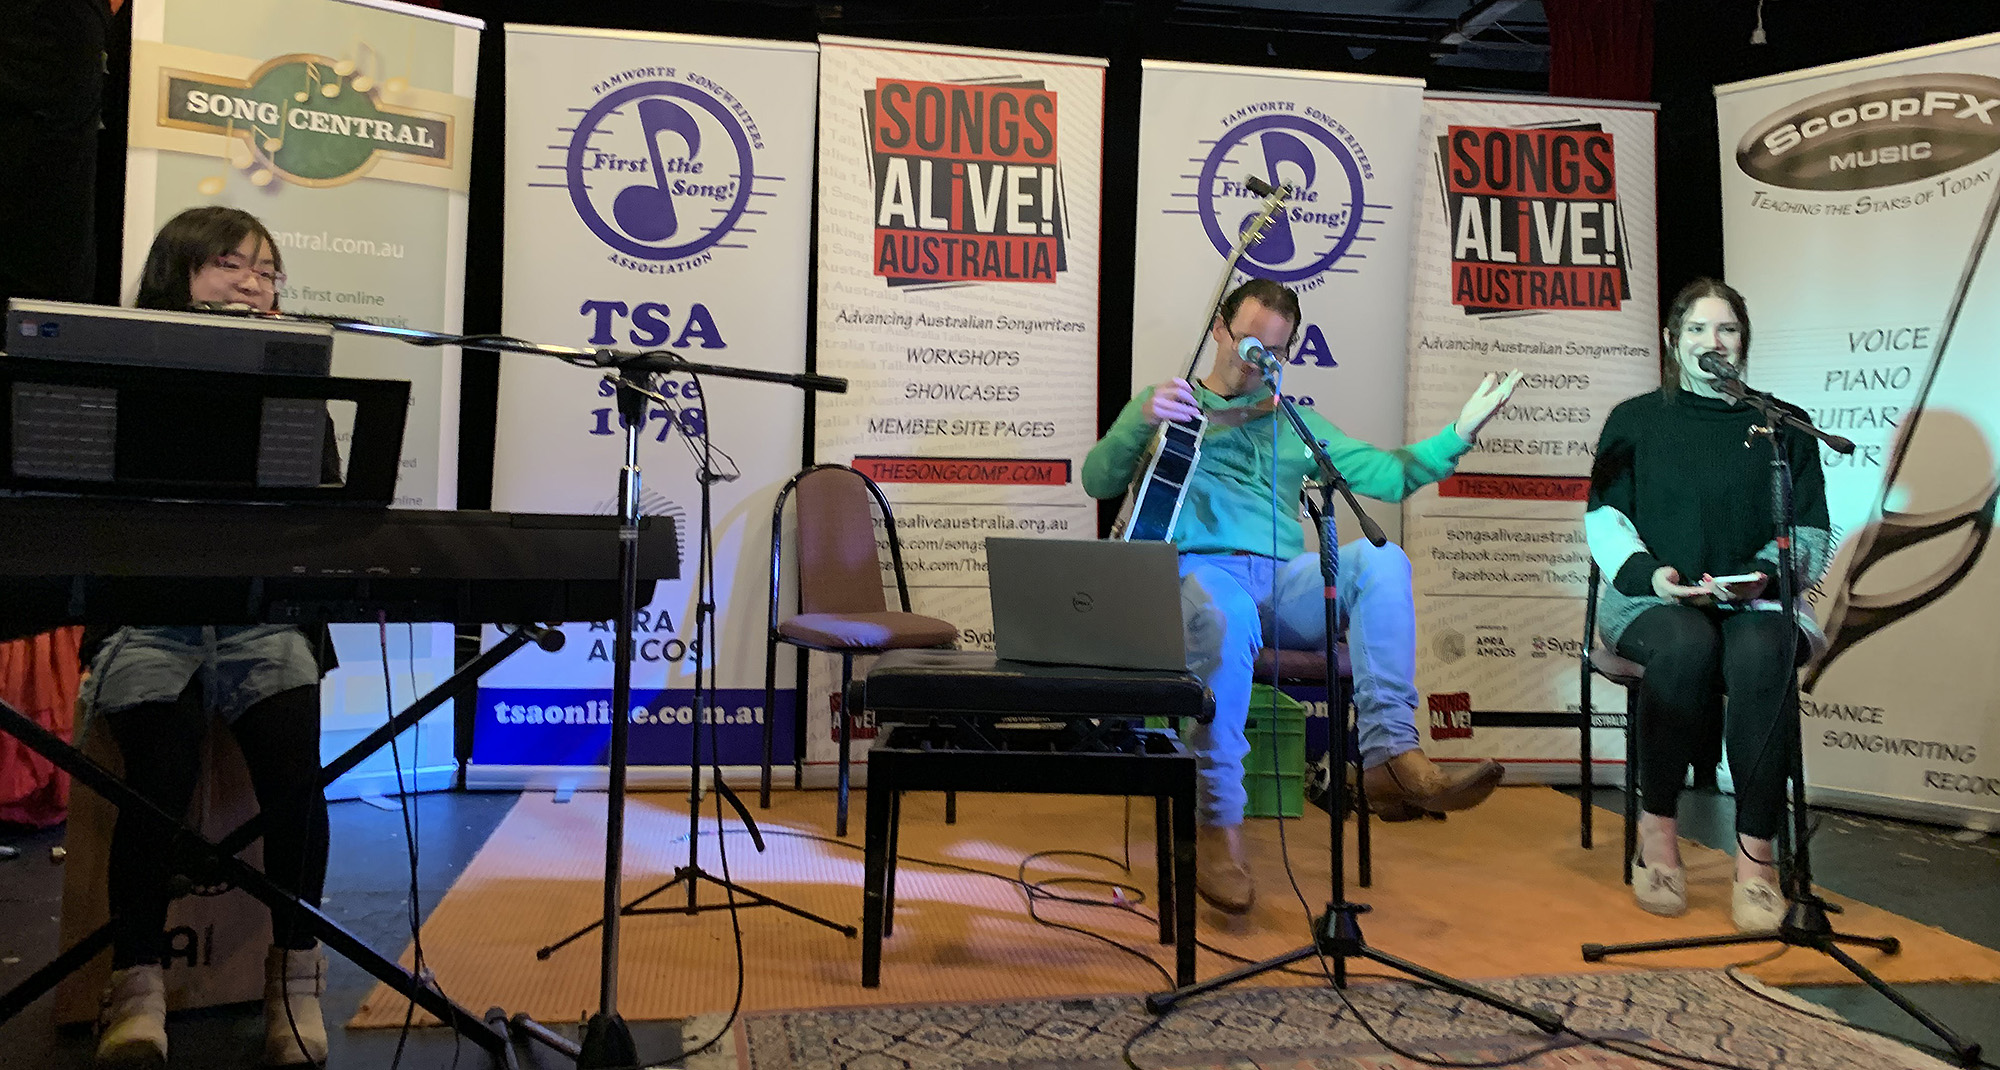 Songsalive! Australia / TSA workshop in the MountainsCaitlin_Ong_Owen_Smith_Angie_Thornton